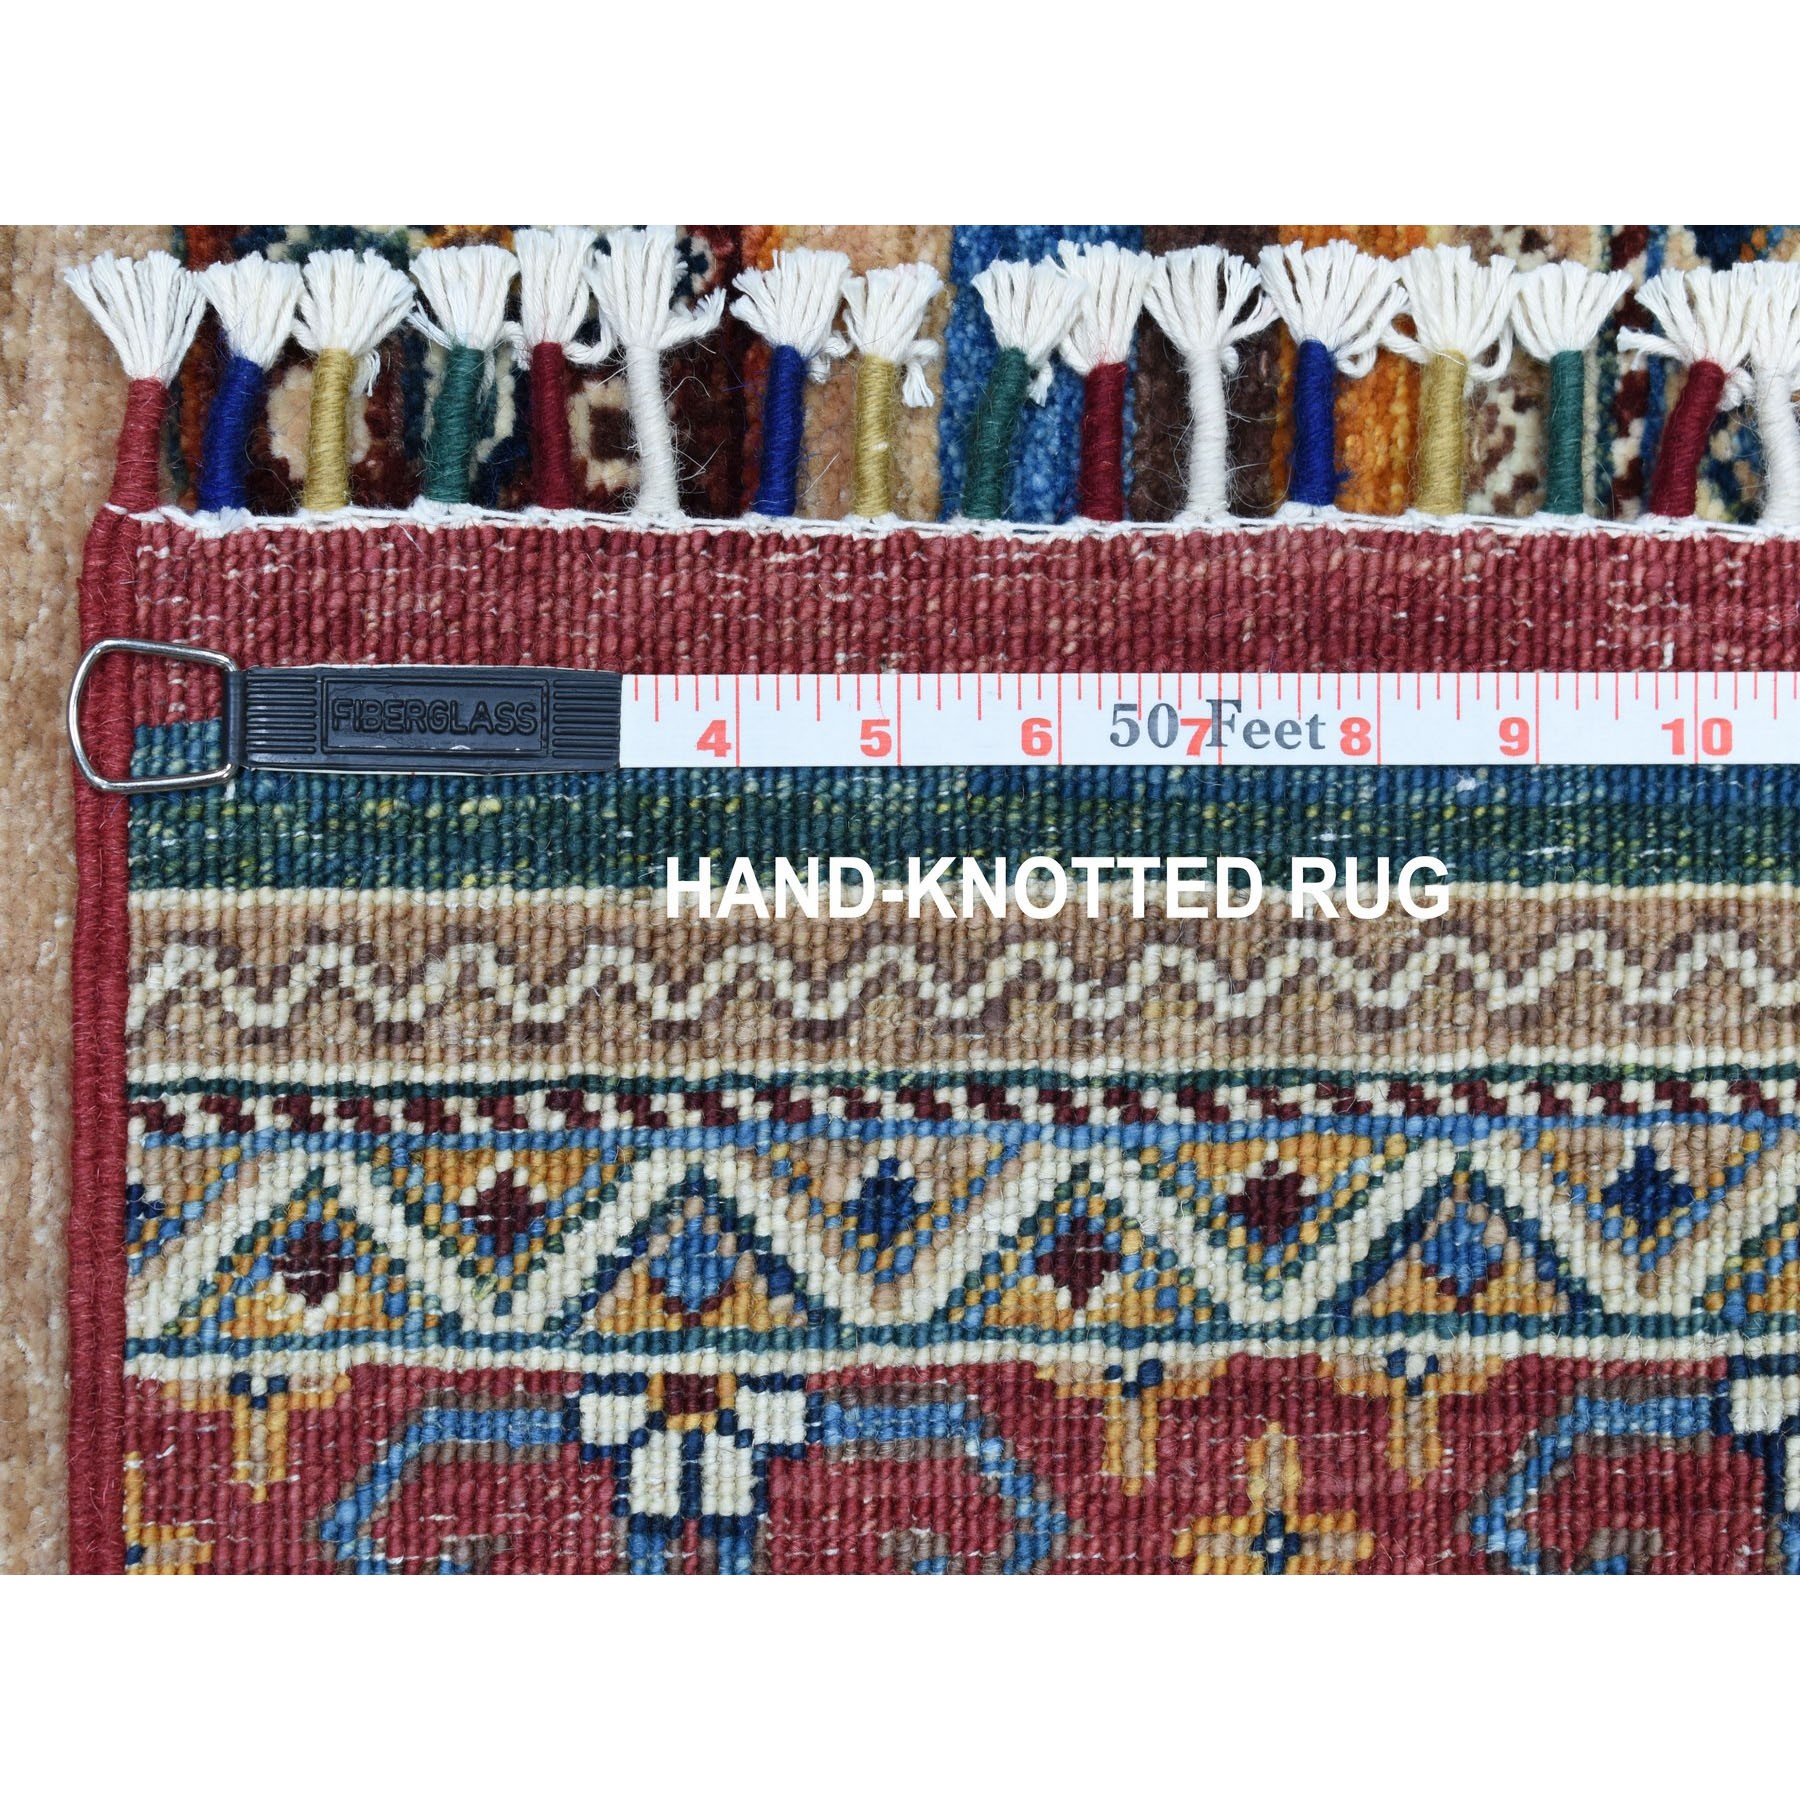 2-5 x6-10  Khorjin Design Runner Red Super Kazak Tribal Pure Wool Hand Knotted Oriental Rug 